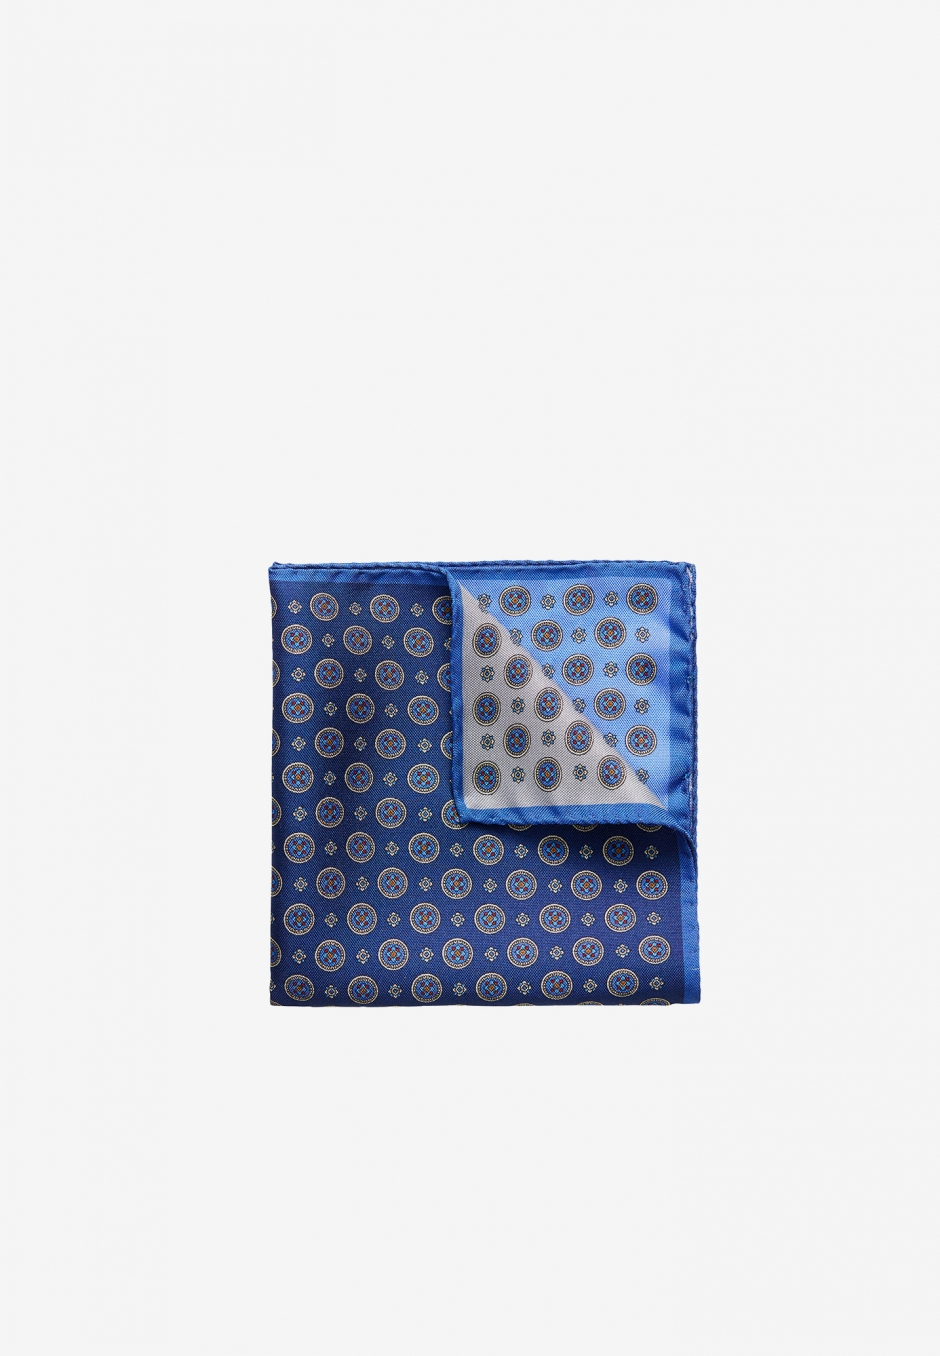 Eton Silk Pocket Square Blue Four Squares